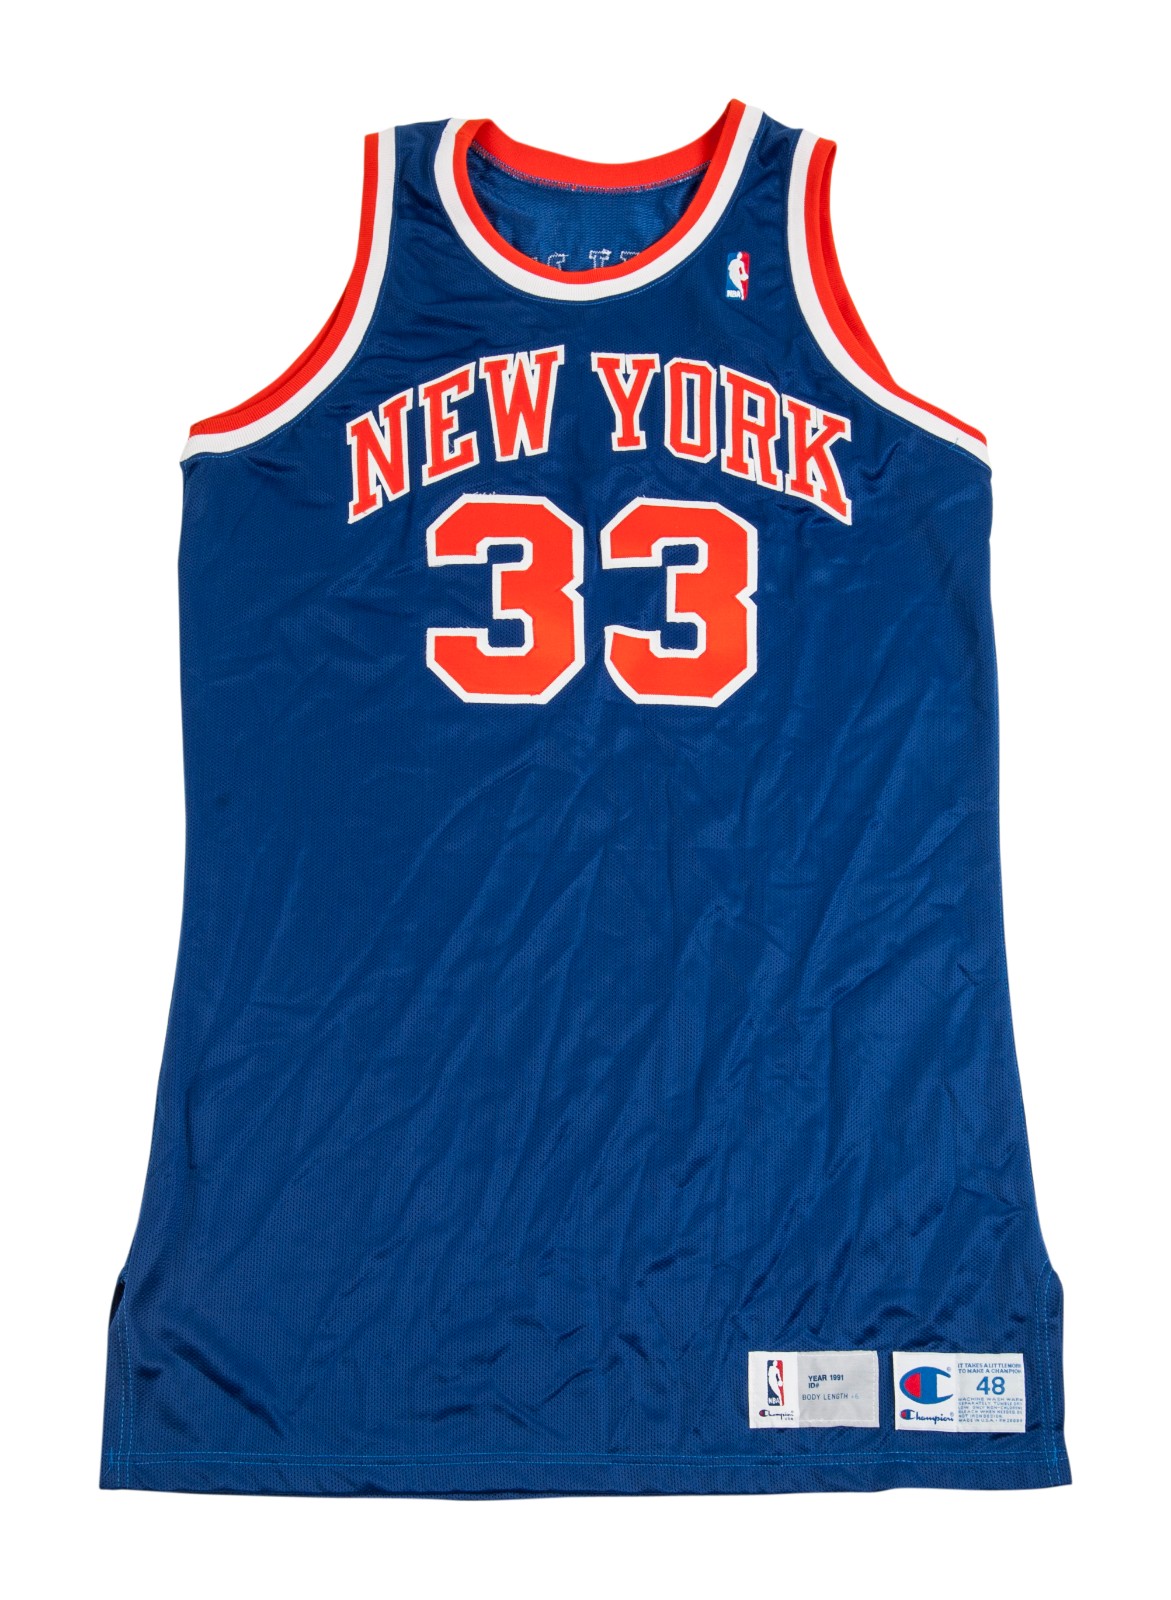 New York Knicks 1989-1997 Away Jersey